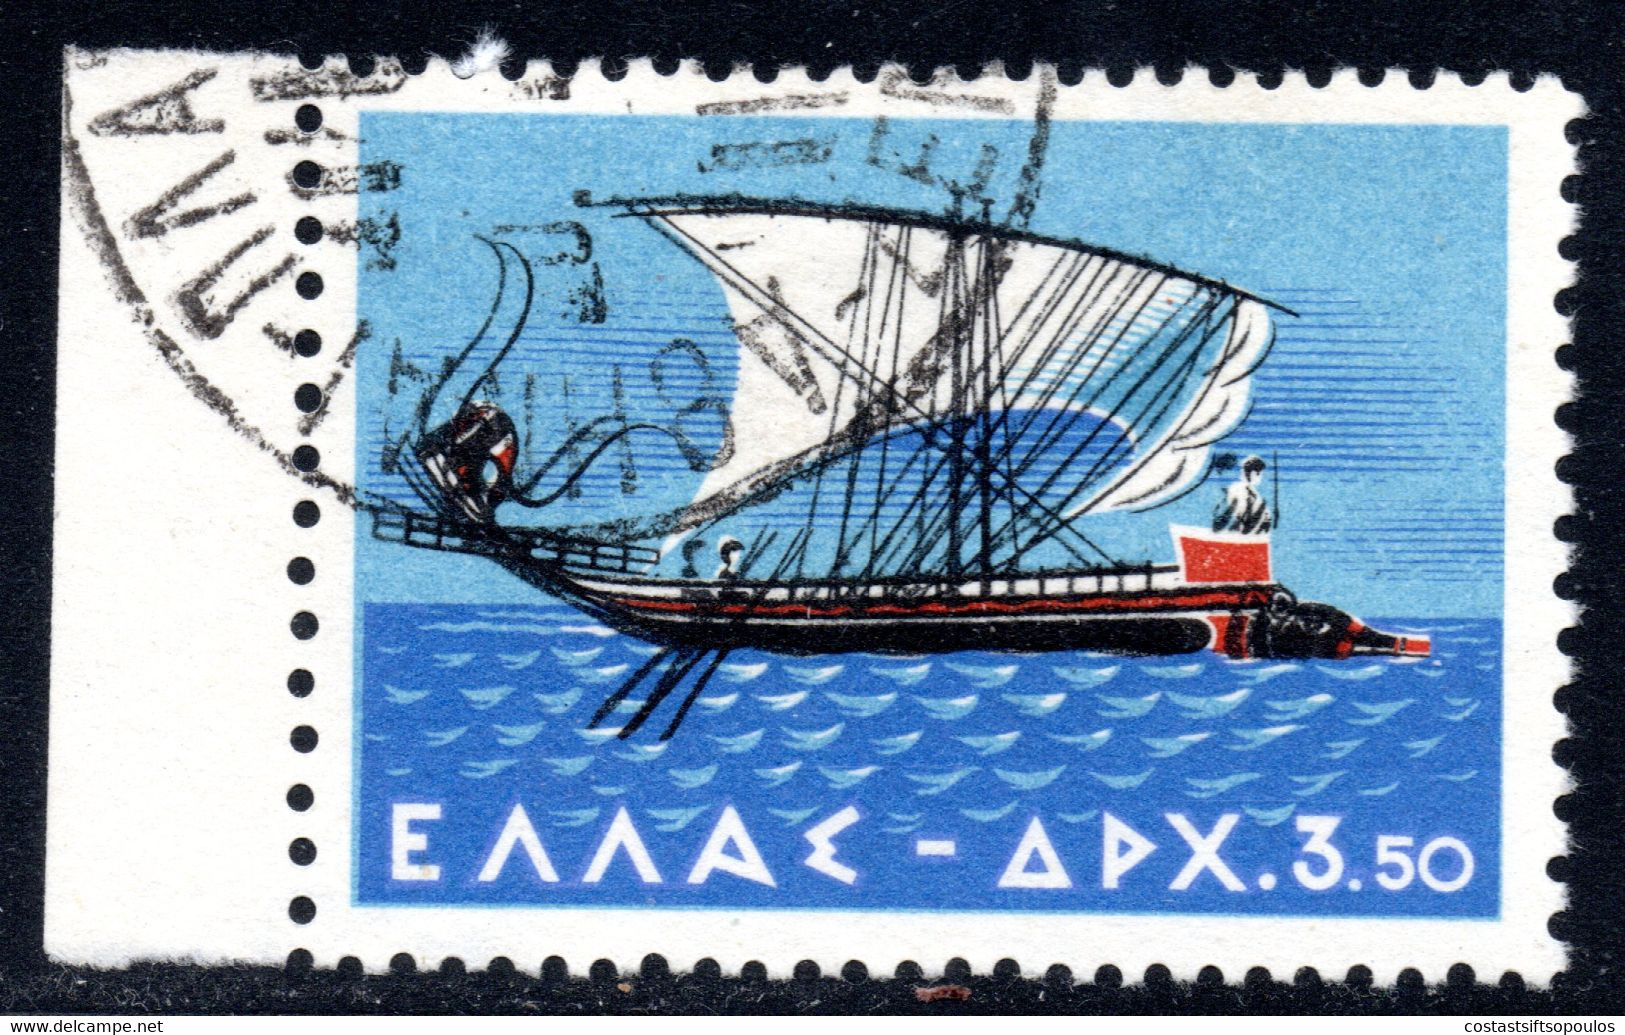 1192.GREECE,1958 MERCHANT MARINE 3.50 DR. HELLAS 795a DOUBLE IMPRESSION OF BLACK - Variedades Y Curiosidades